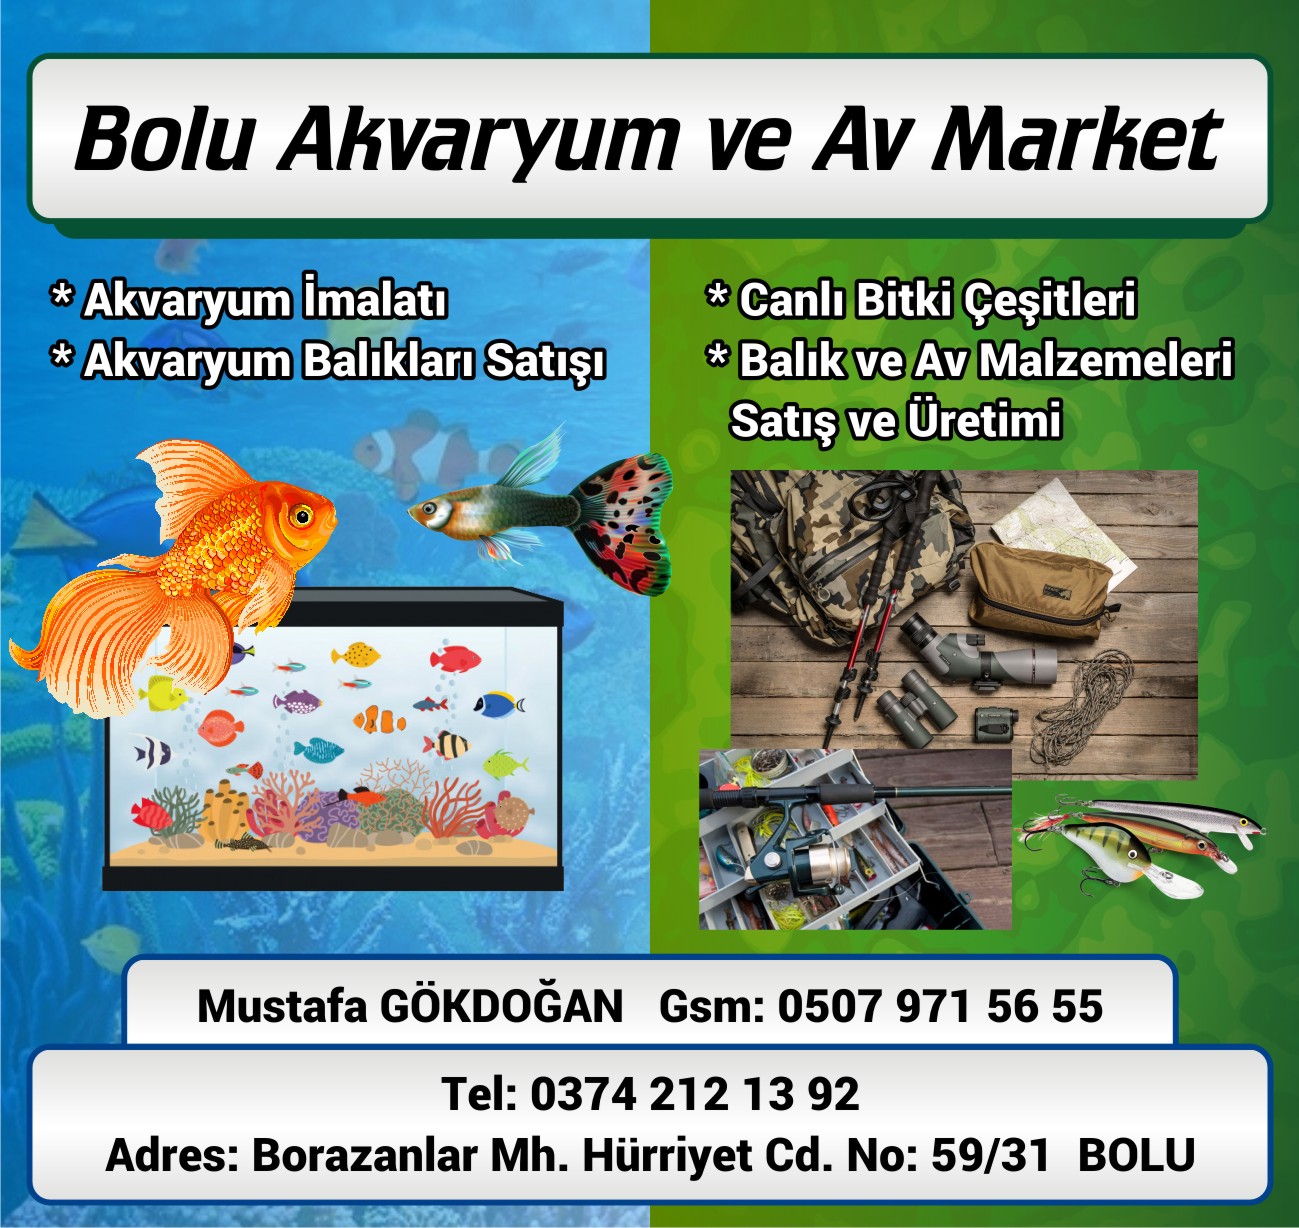 bolu-akvaryum-av-market bolu